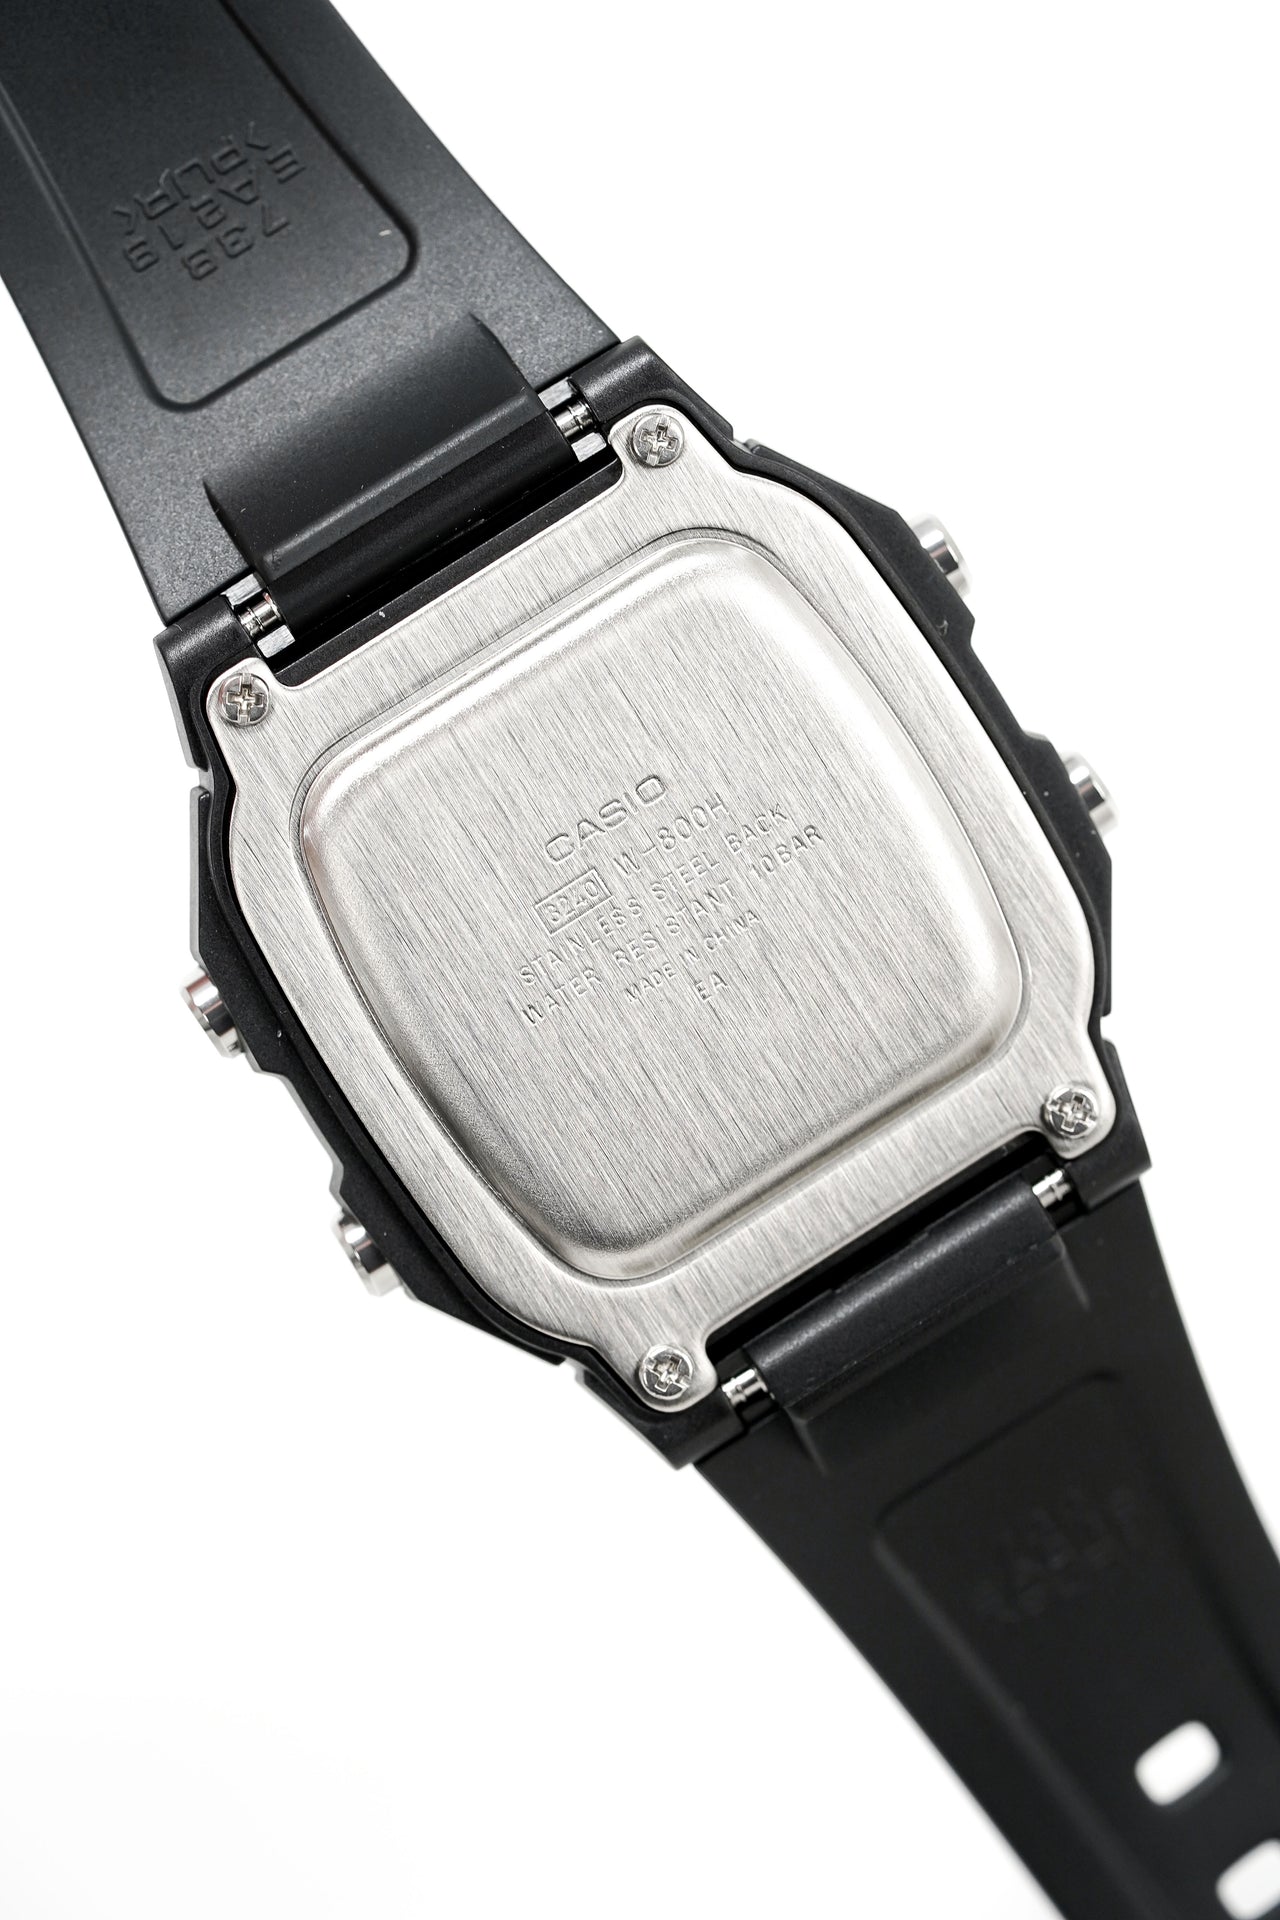 Casio Men's Watch Chronograph Digital Square Black W-800HG-9AVDF